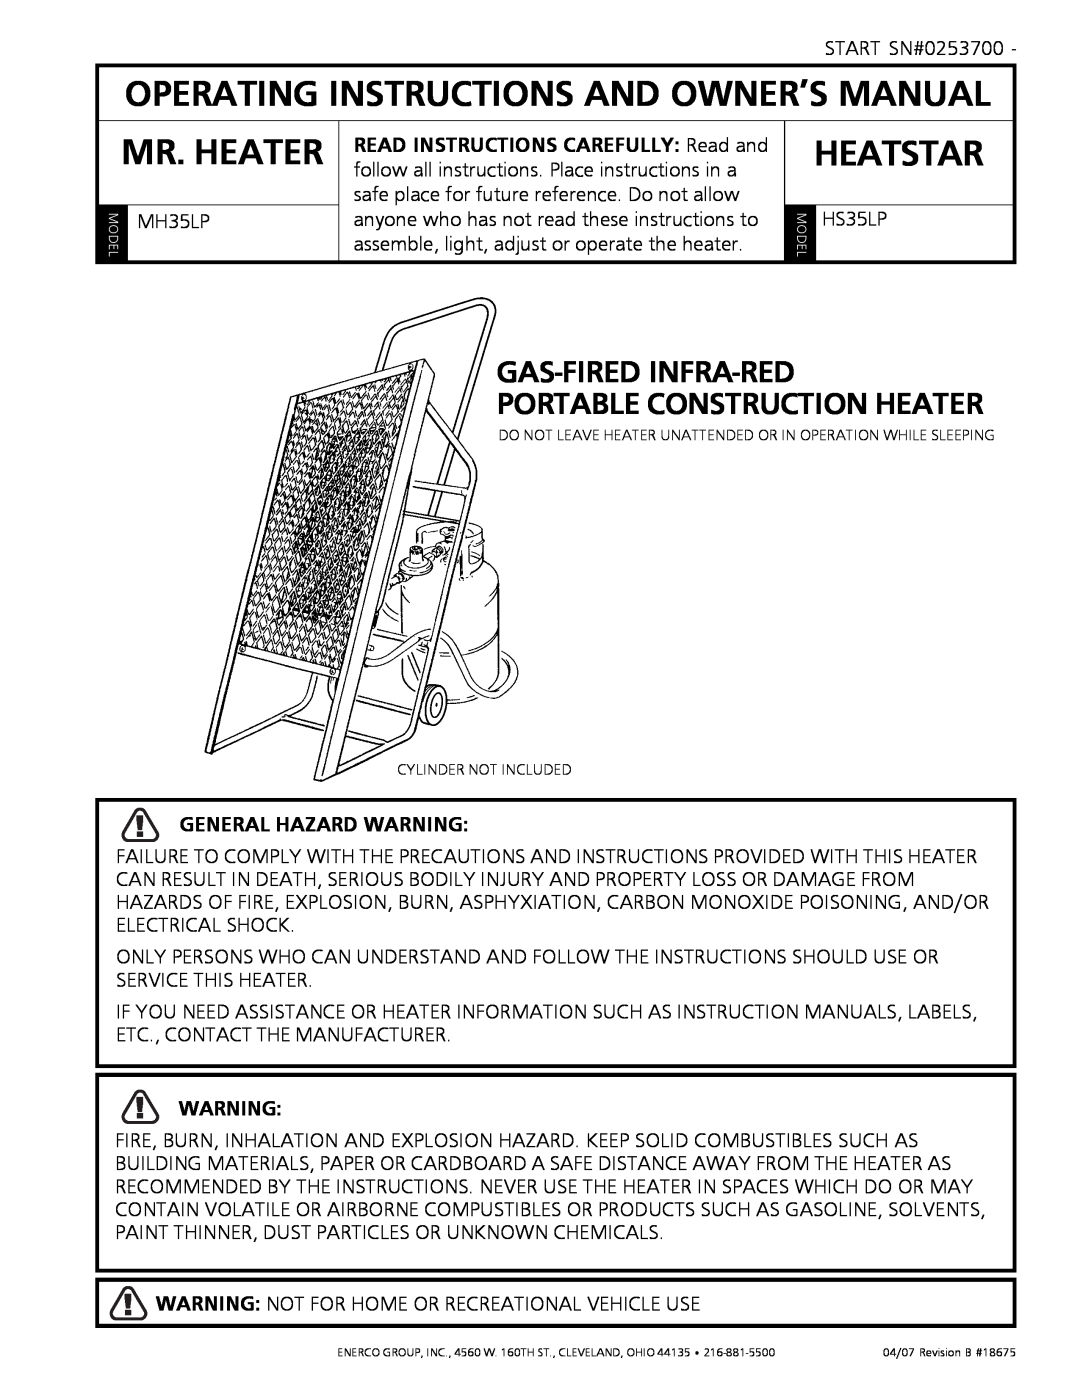 Mr. Heater HS35LP, MH35LP owner manual Mr. Heater, Heatstar, Gas-Fired Infra-Red Portable Construction Heater 